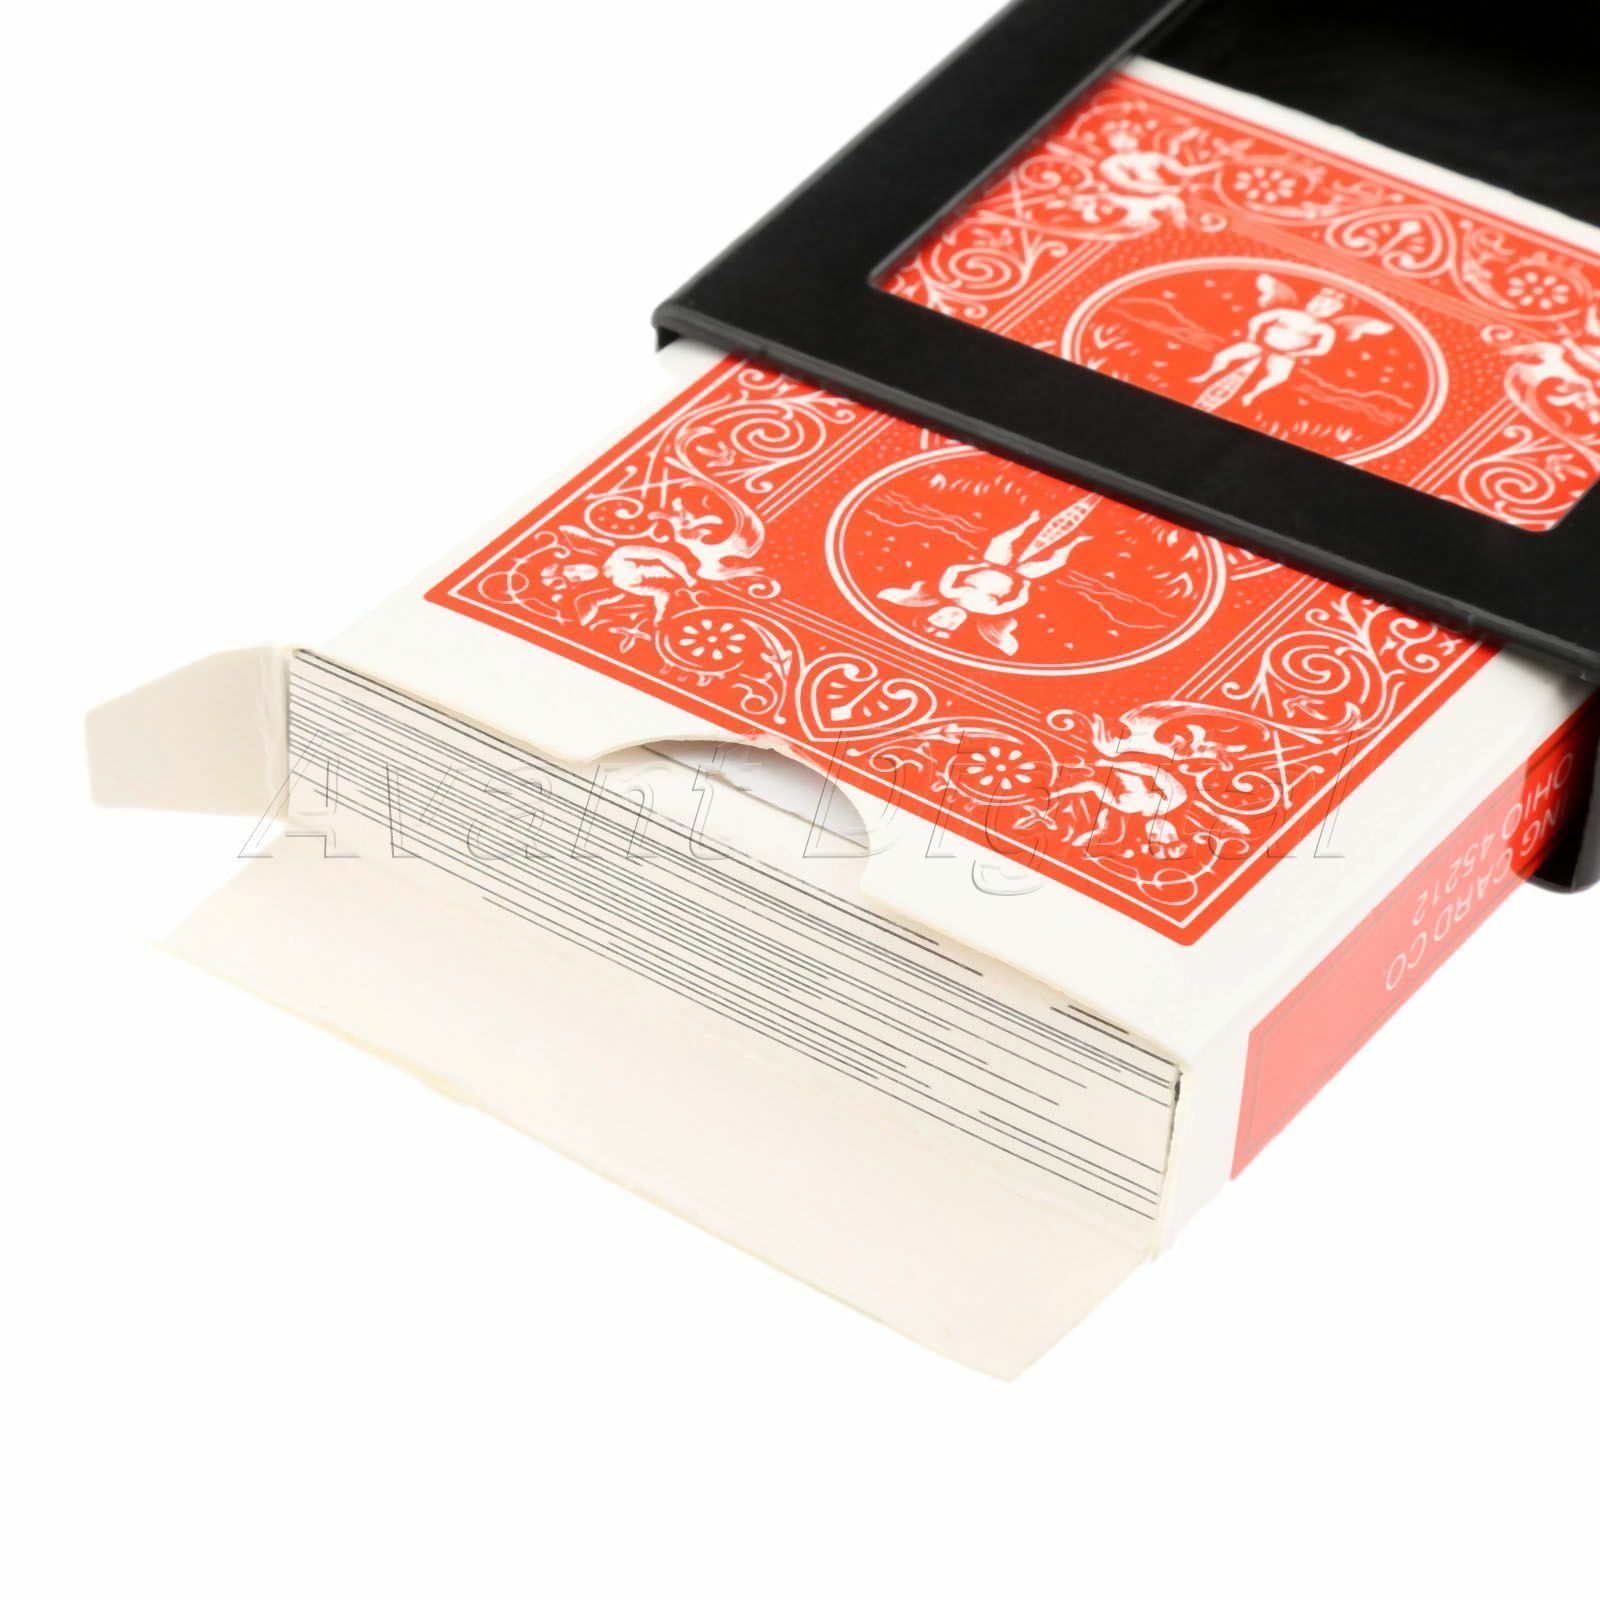 Vanishing Disappearing Card Box Case Close-Up Street Magic Trick Set Interesting